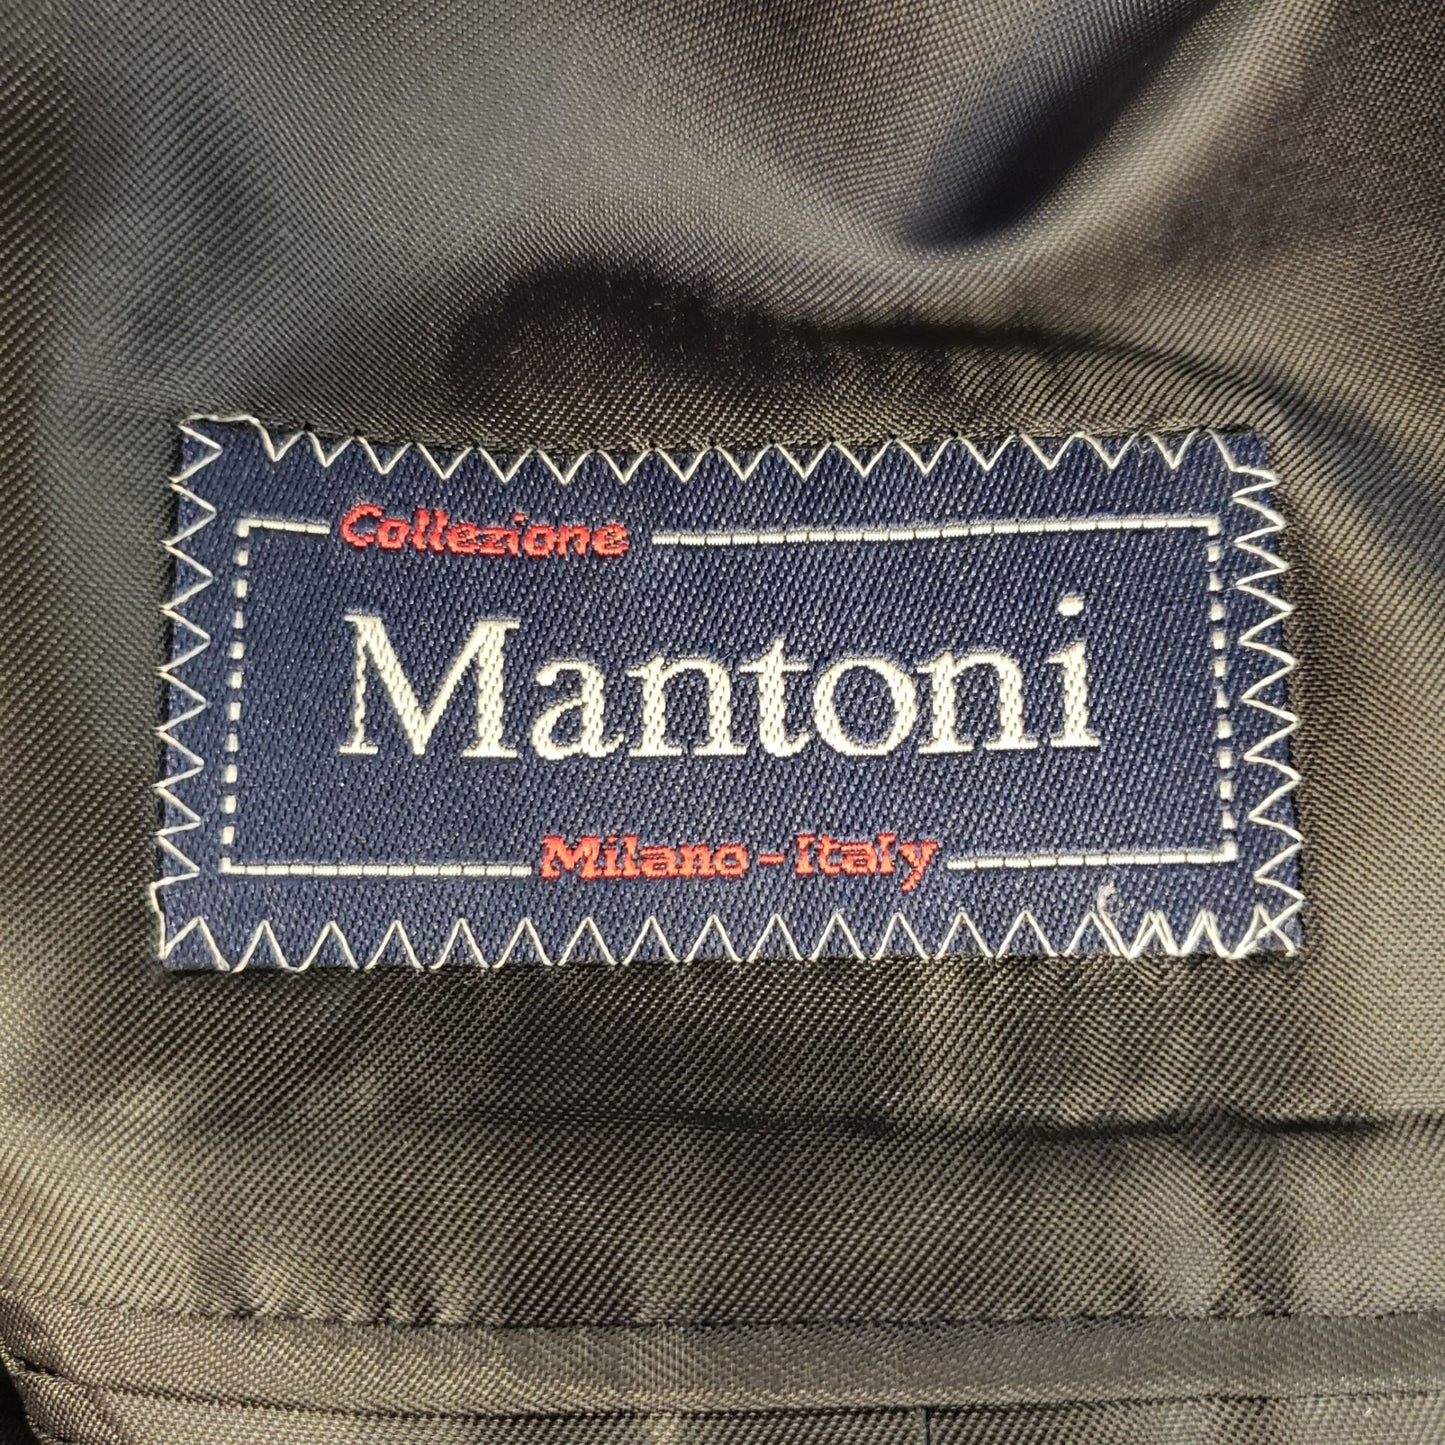 Mantoni 100% Wool 3 Button Jacket Blazer